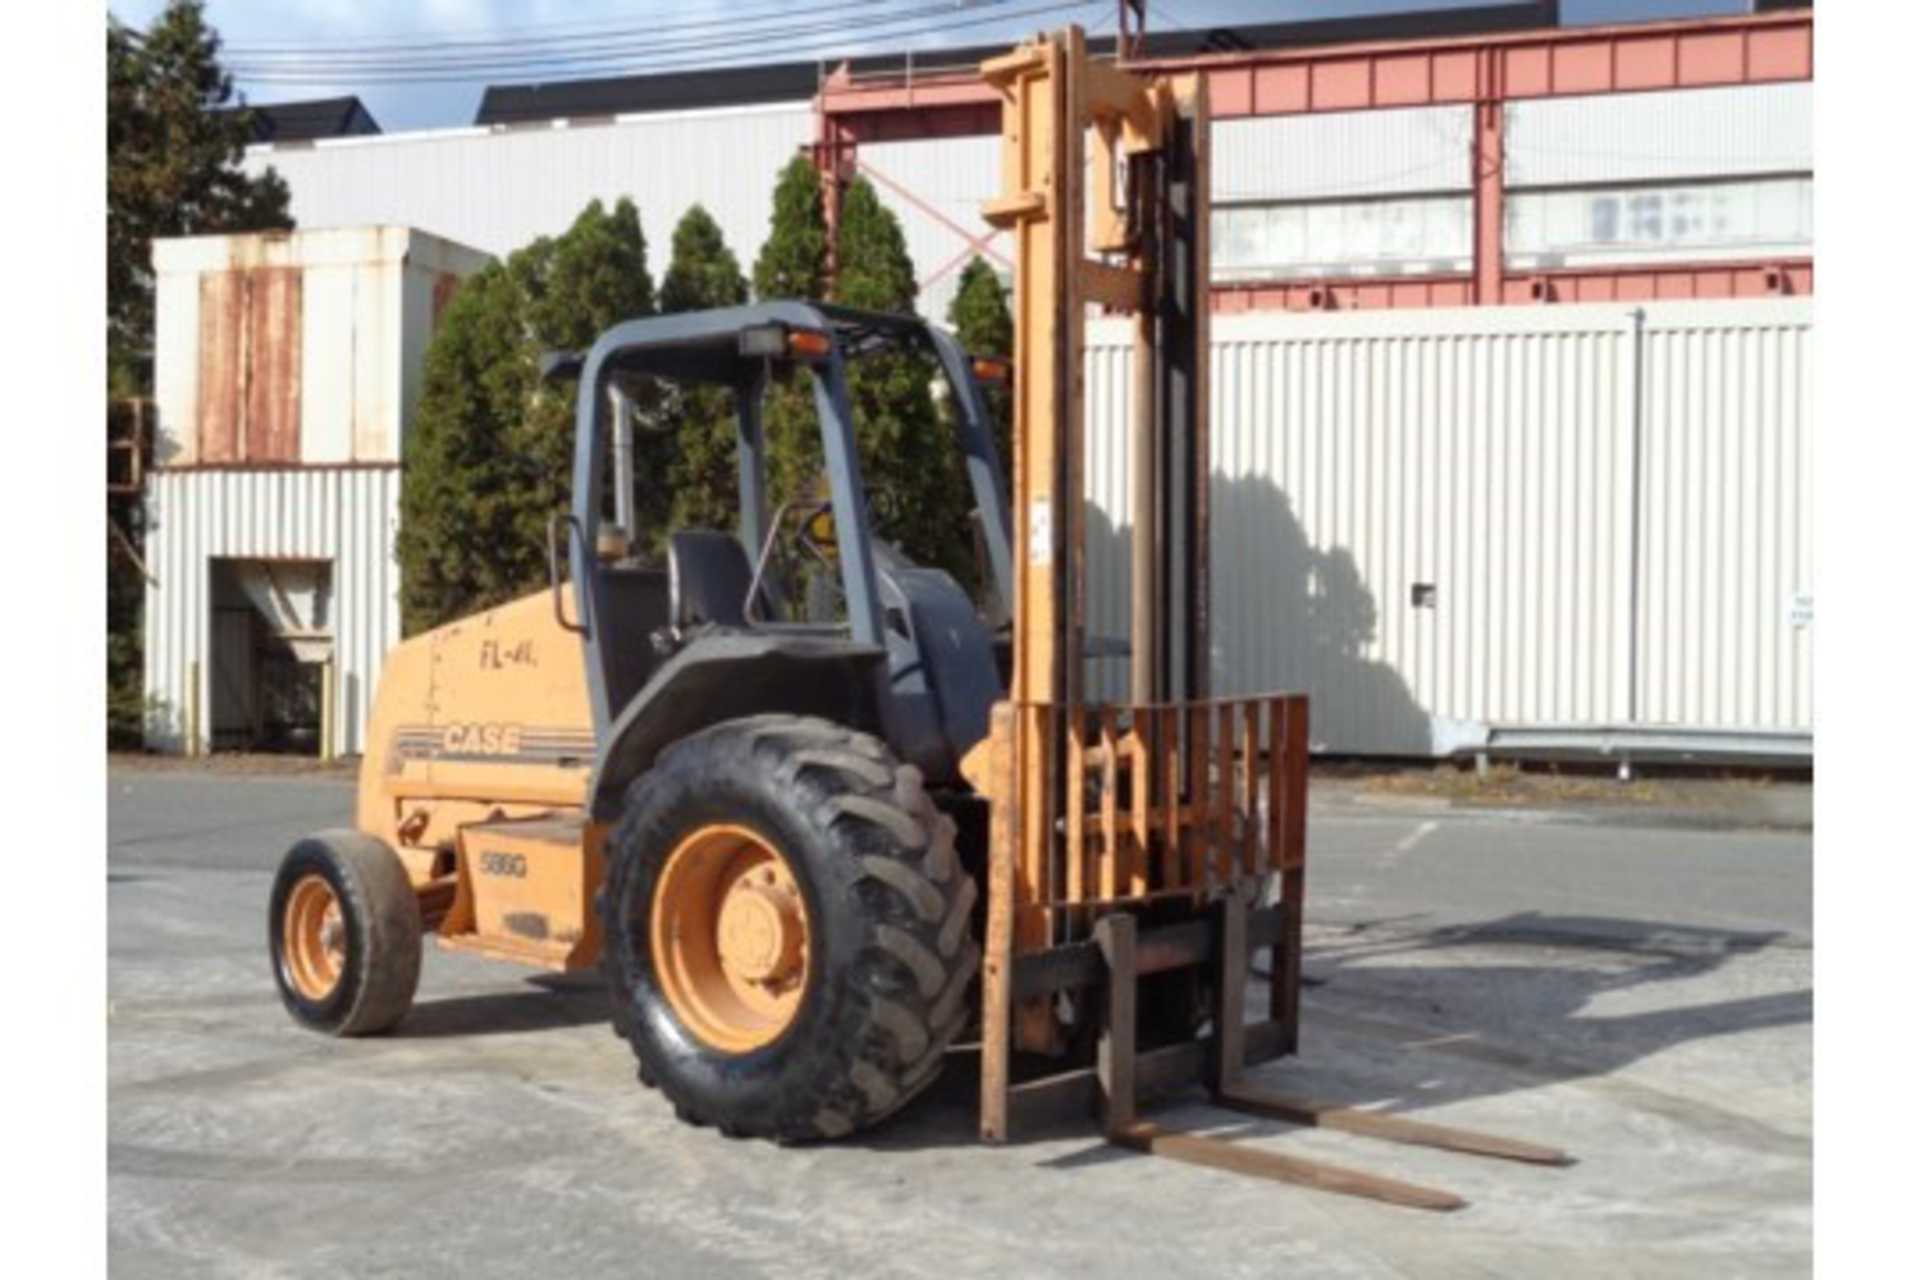 Case 580G 6000lb Rough Terrain Forklift - Image 5 of 20